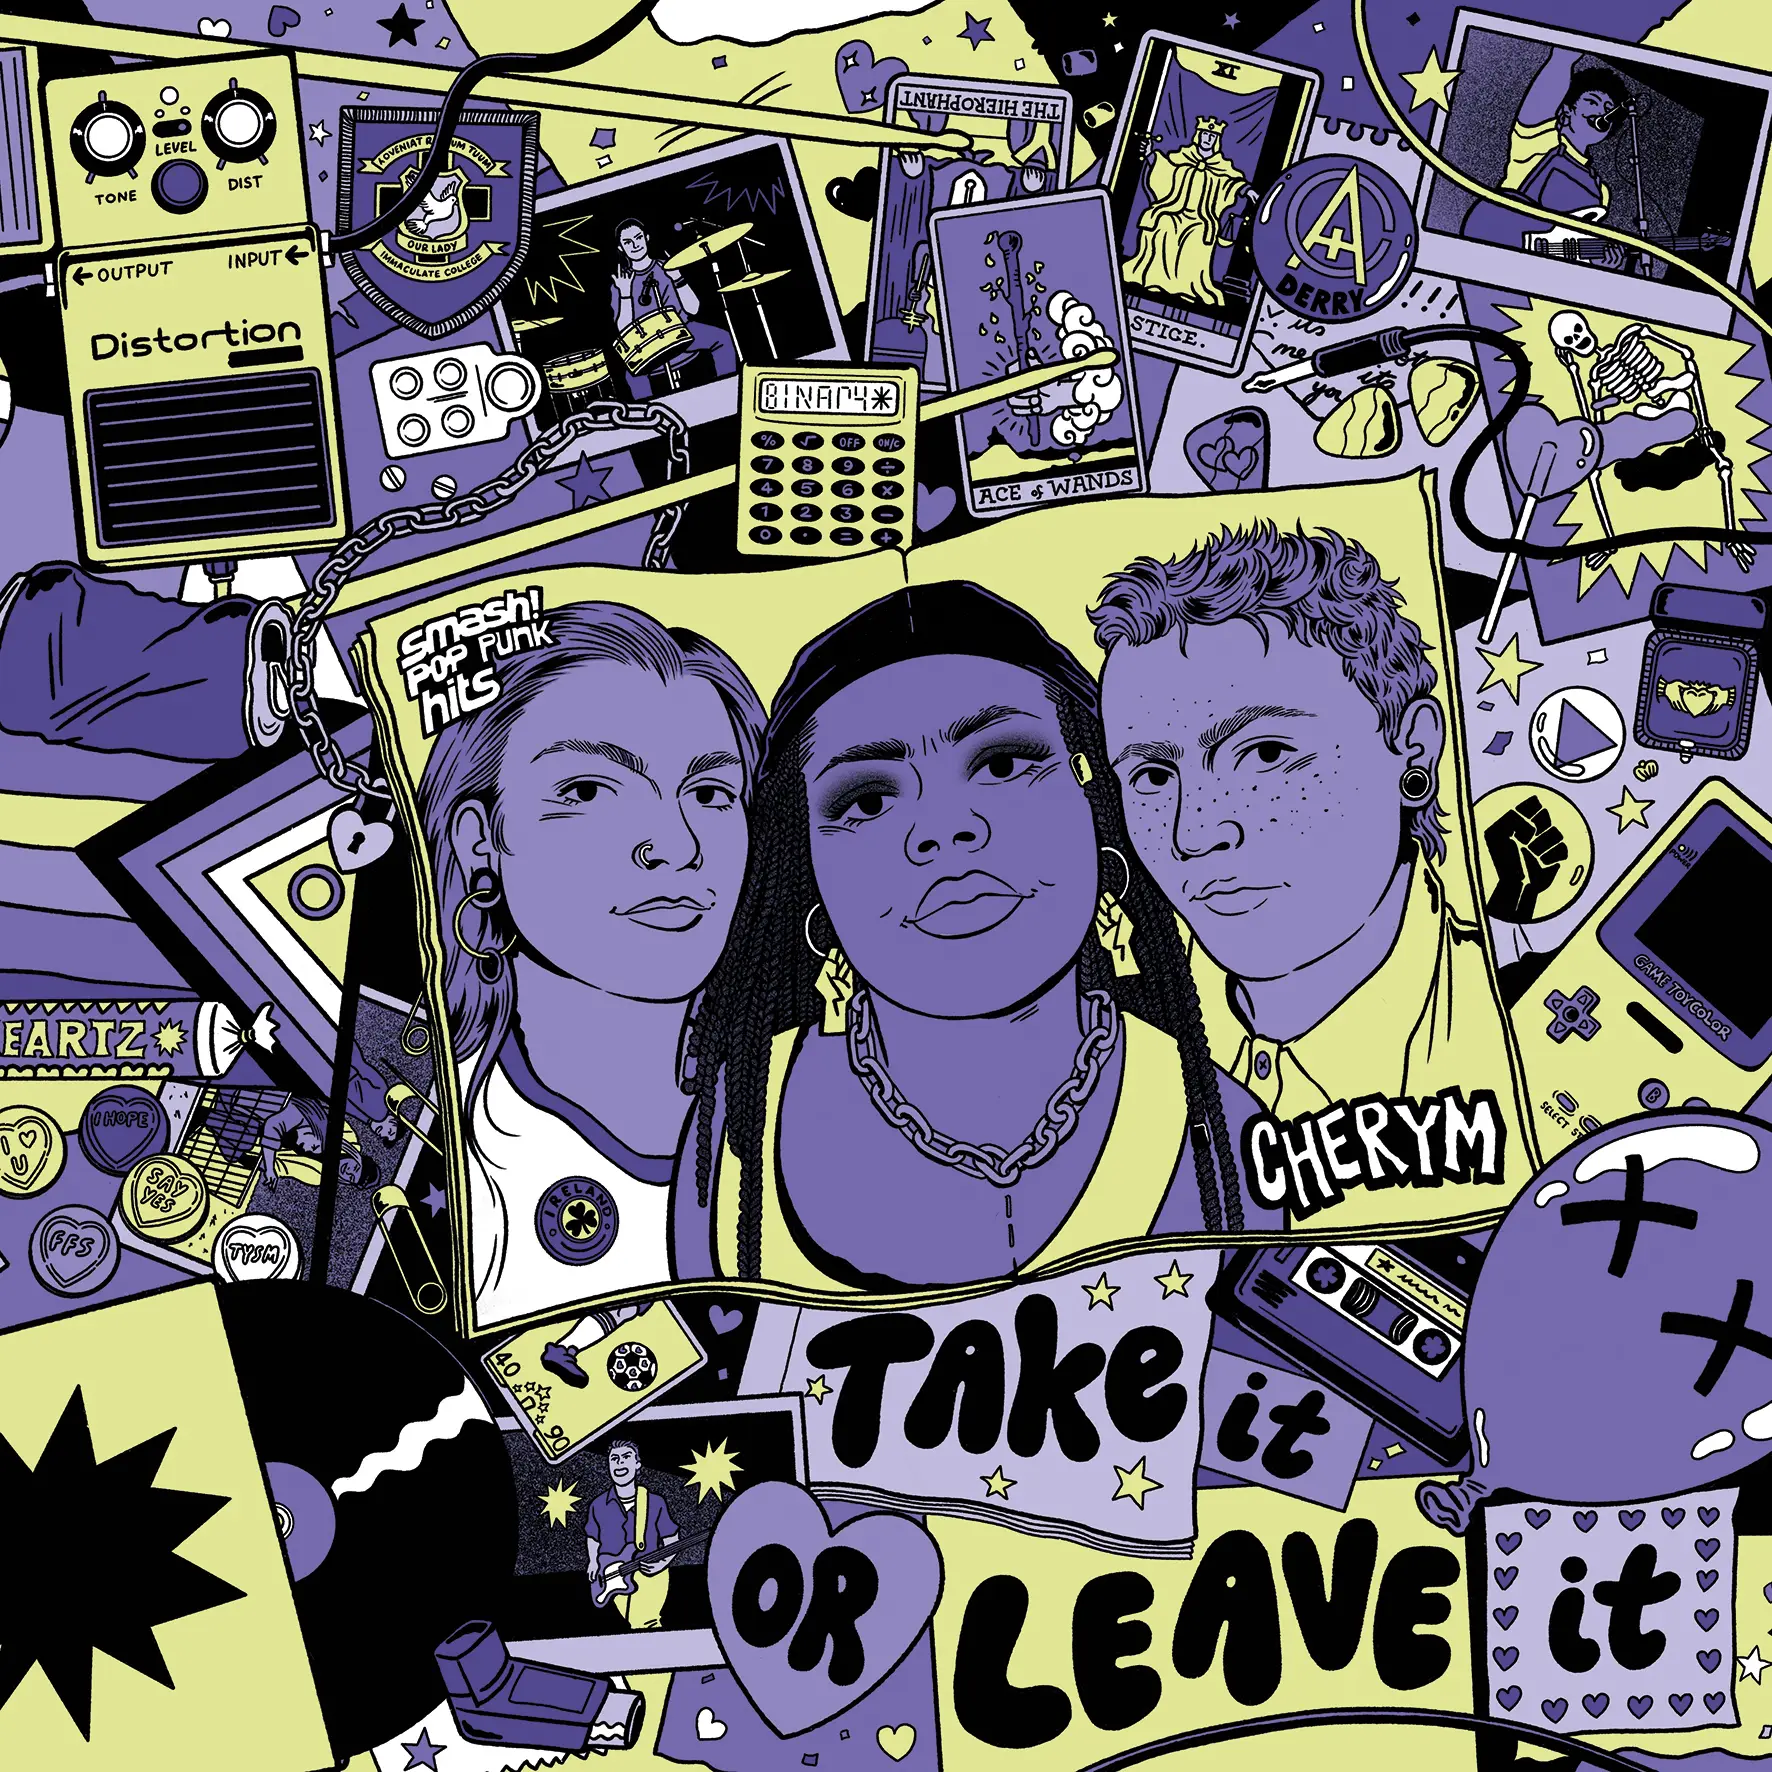 Cherym - Take It Or Leave It artwork